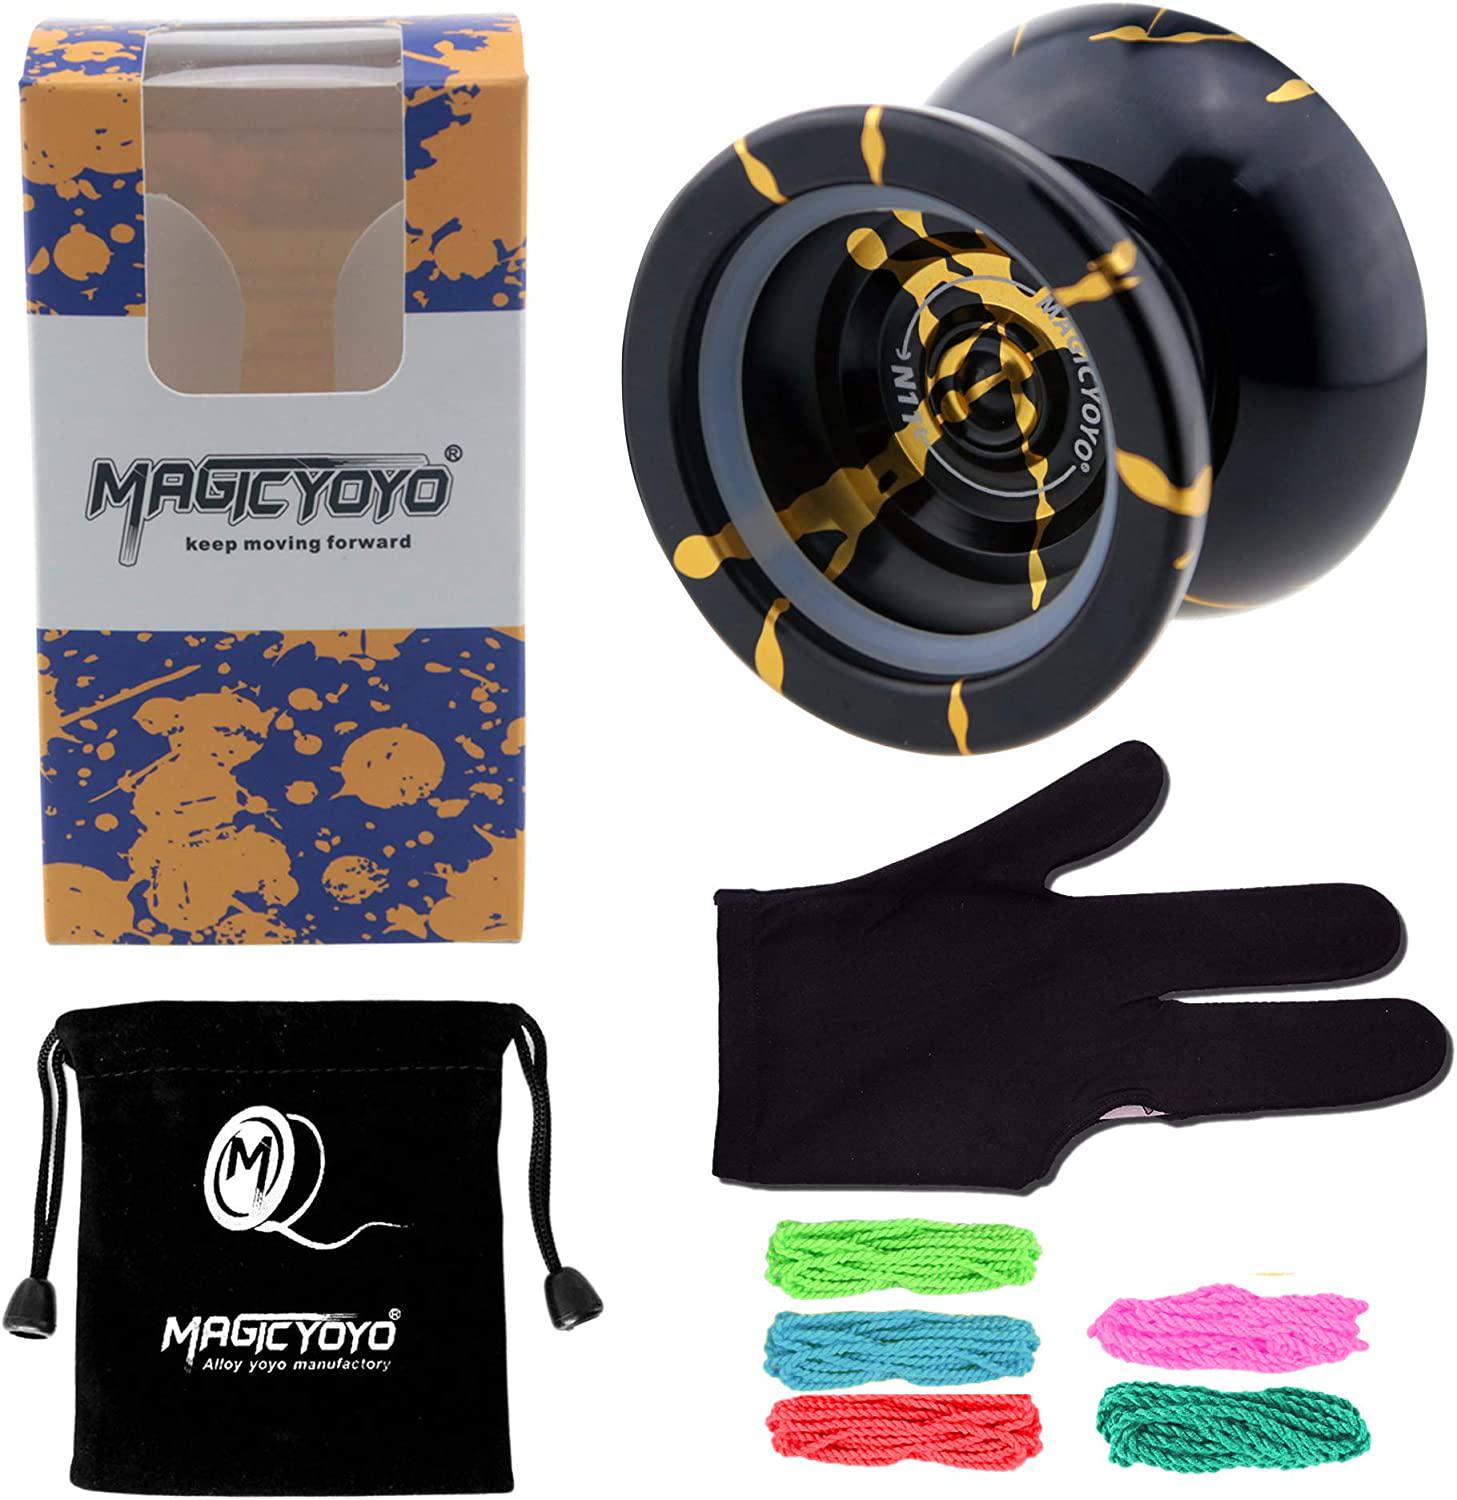 MAGICYOYO, MAGICYOYO N11 Alloy Aluminum Professional Yoyo Unresponsive YoYo Ball (Black Golden) Bag, Glove 5 Strings